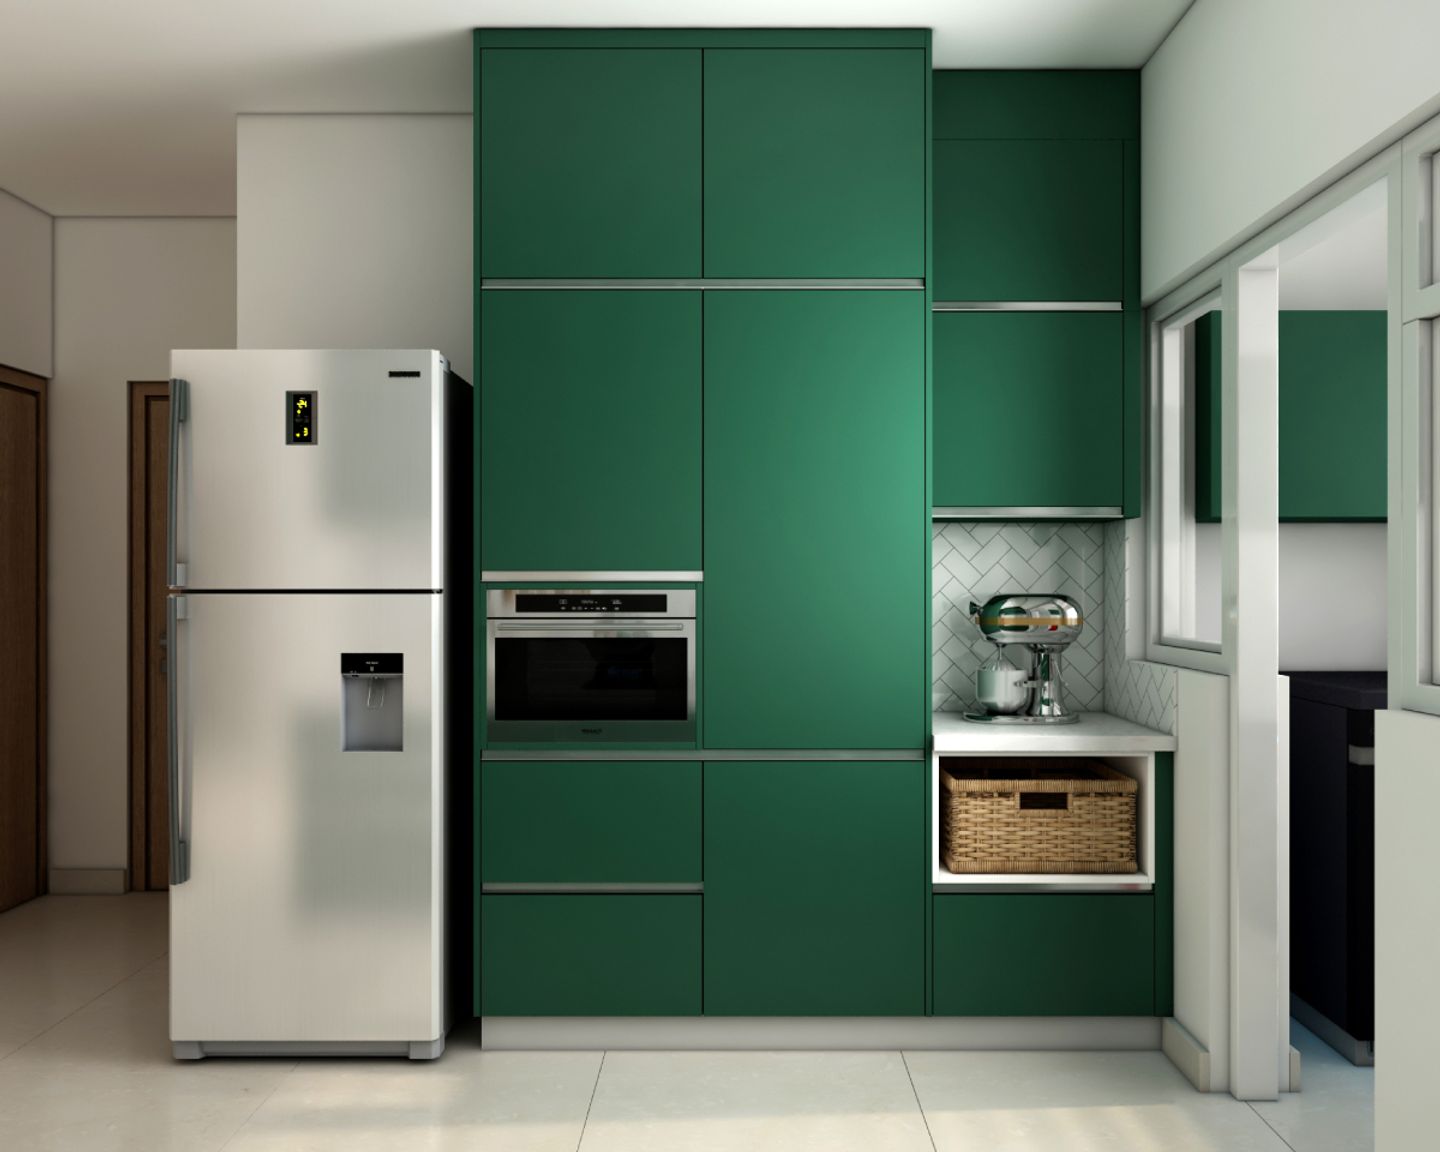 Modern Modular Kitchen Design With Green Cabinets